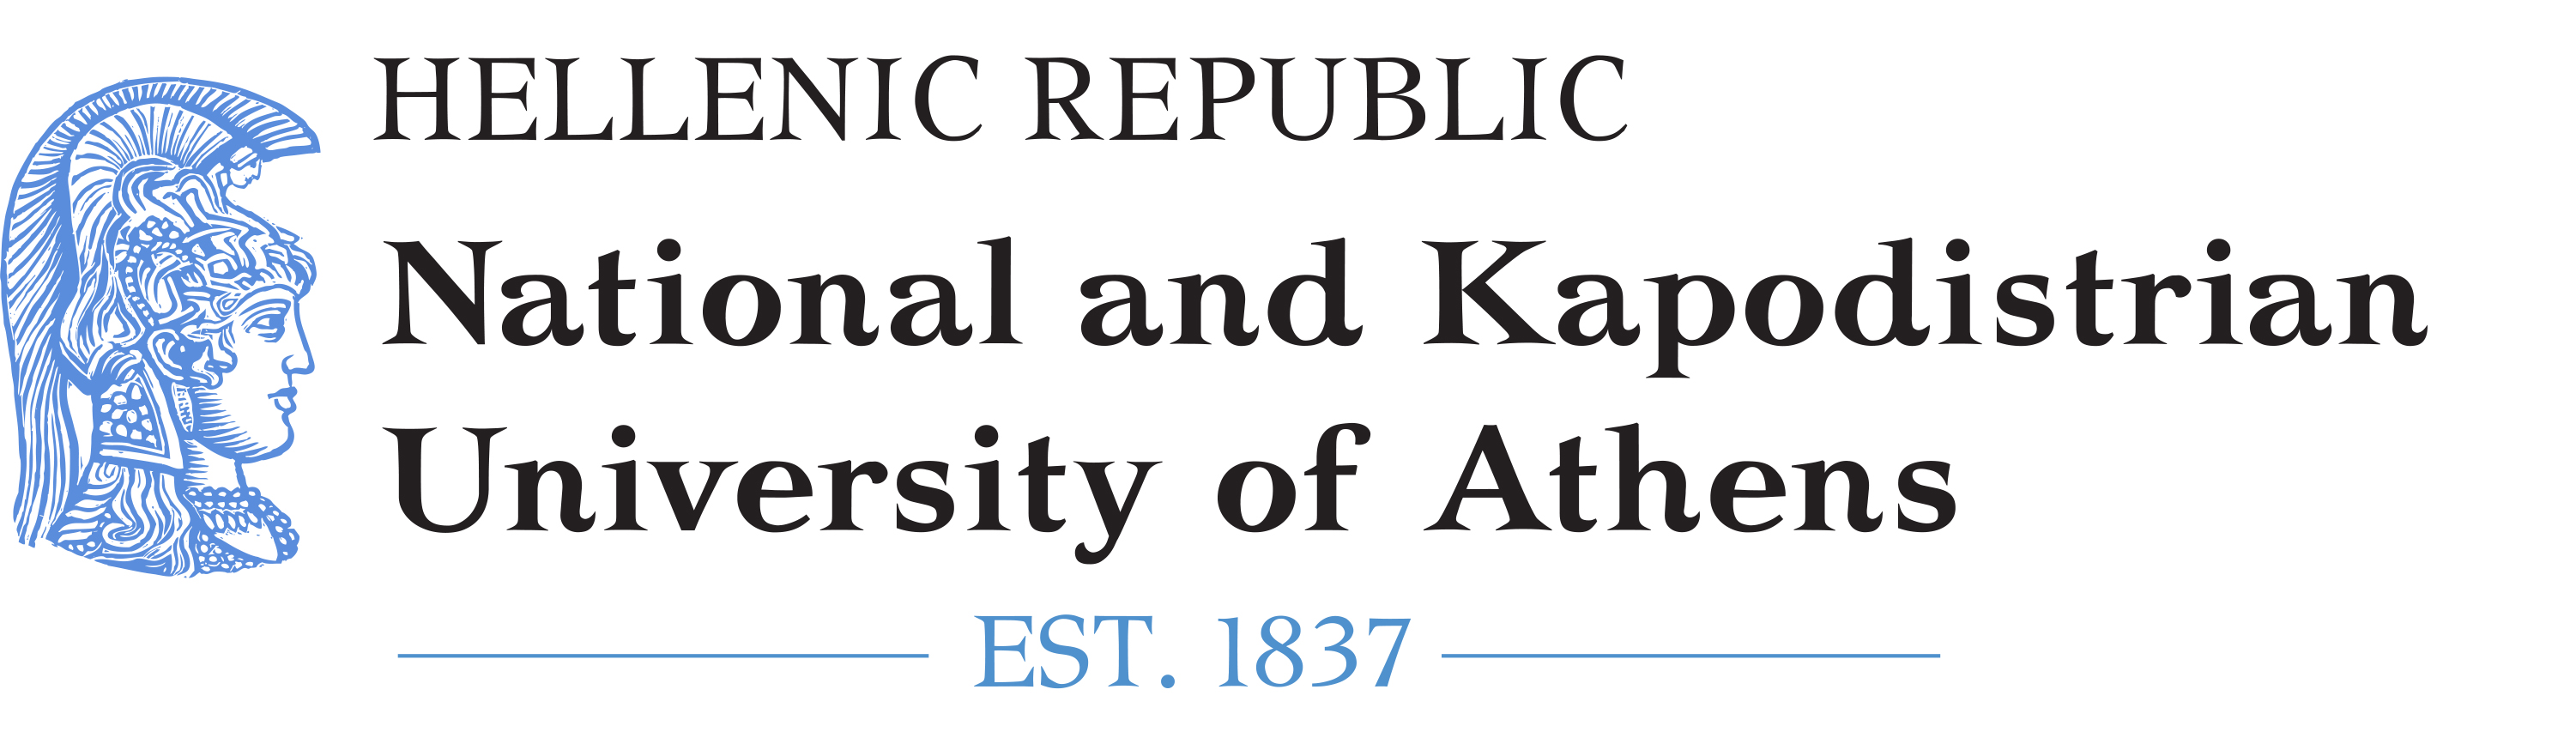 National and Kapodistrian University of Athens' logo directing to the university's main website.